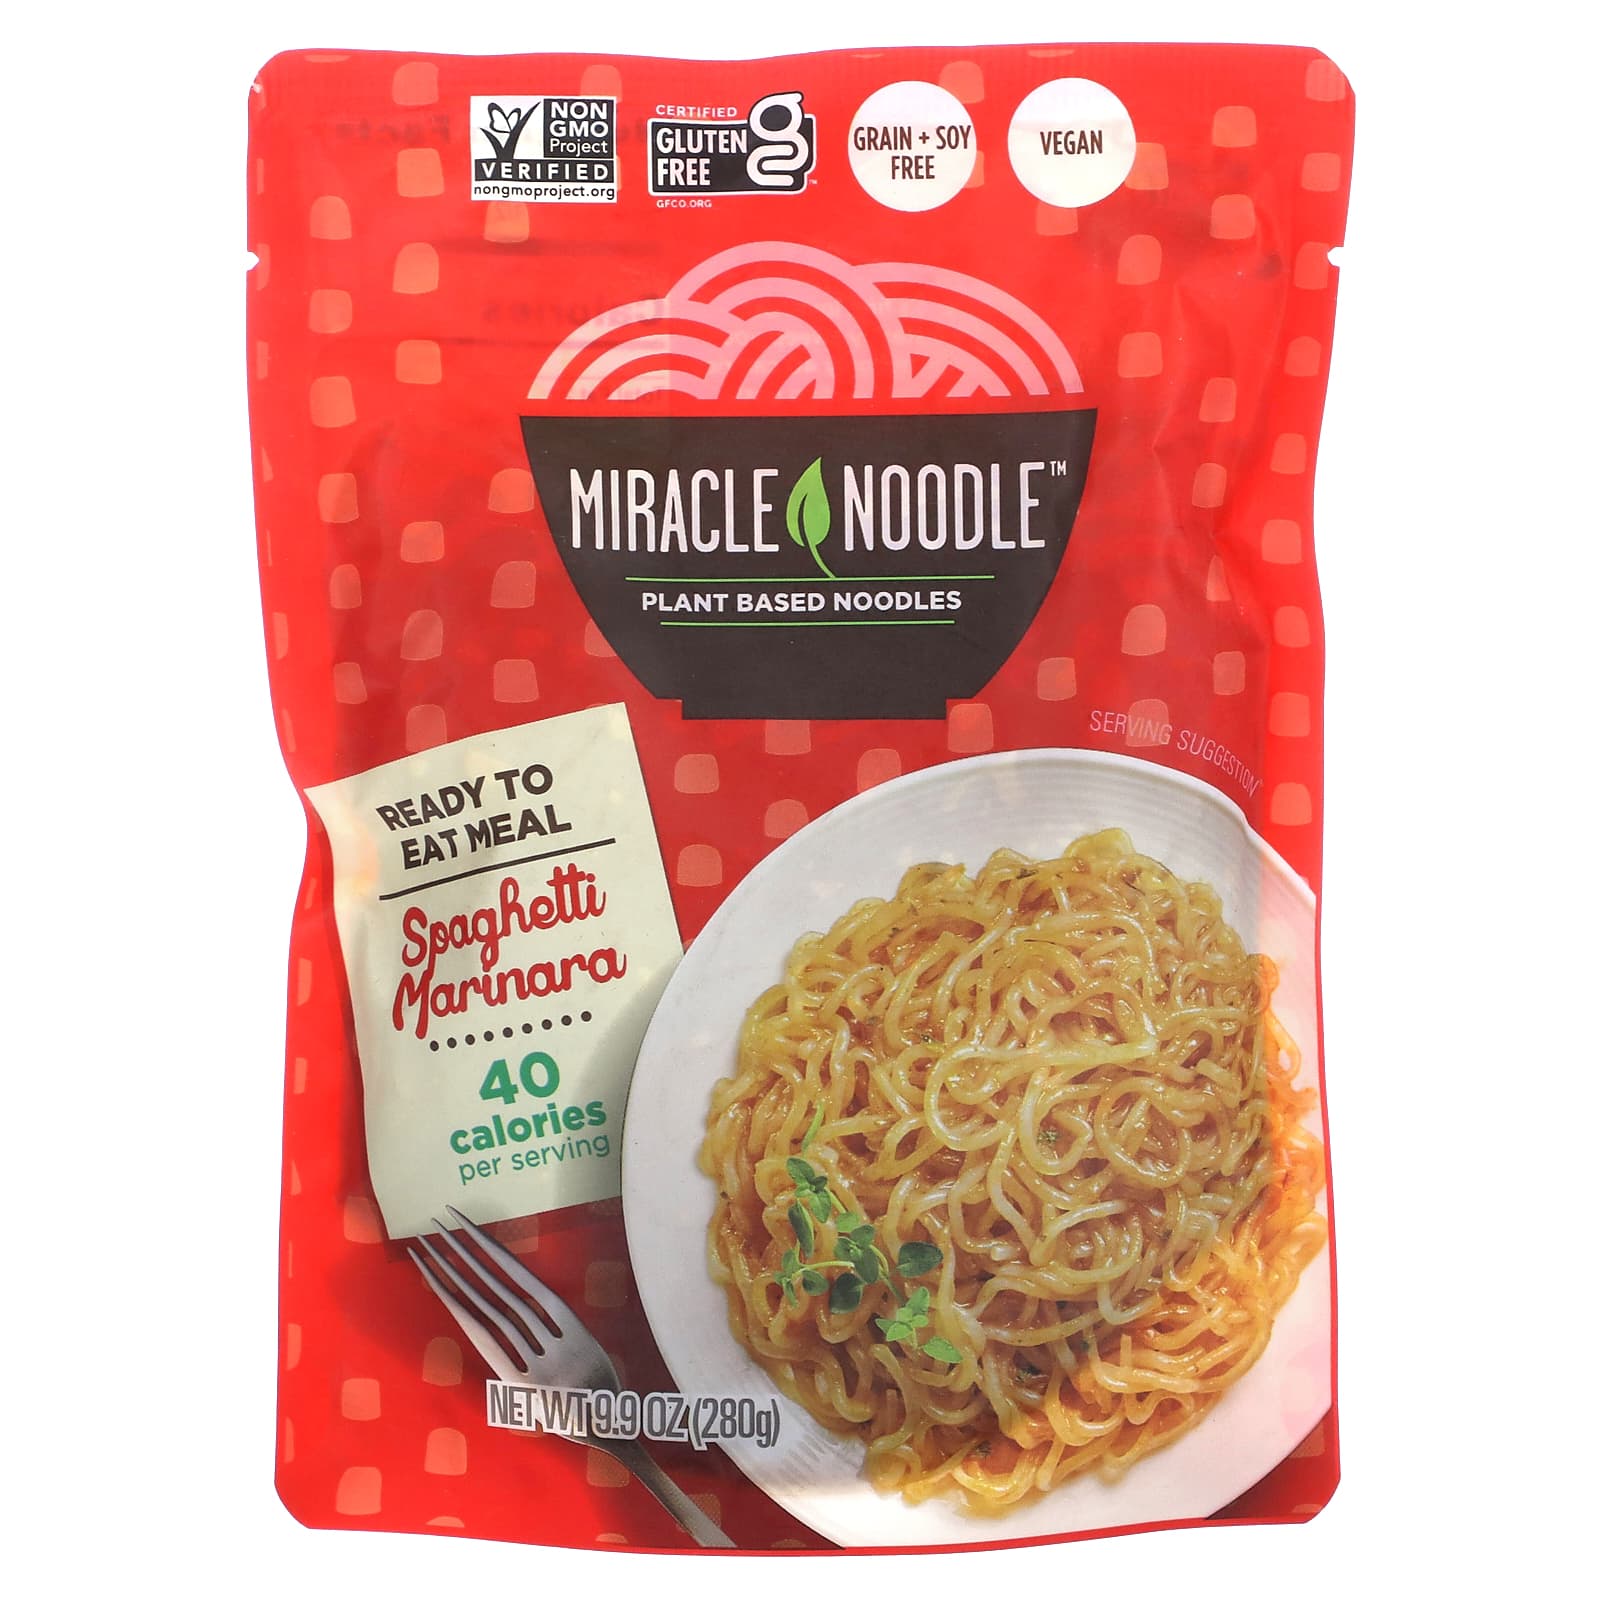 Miracle Noodle, Ready-to-Eat Meal, Spaghetti Marinara, 9.9 oz (280 g)